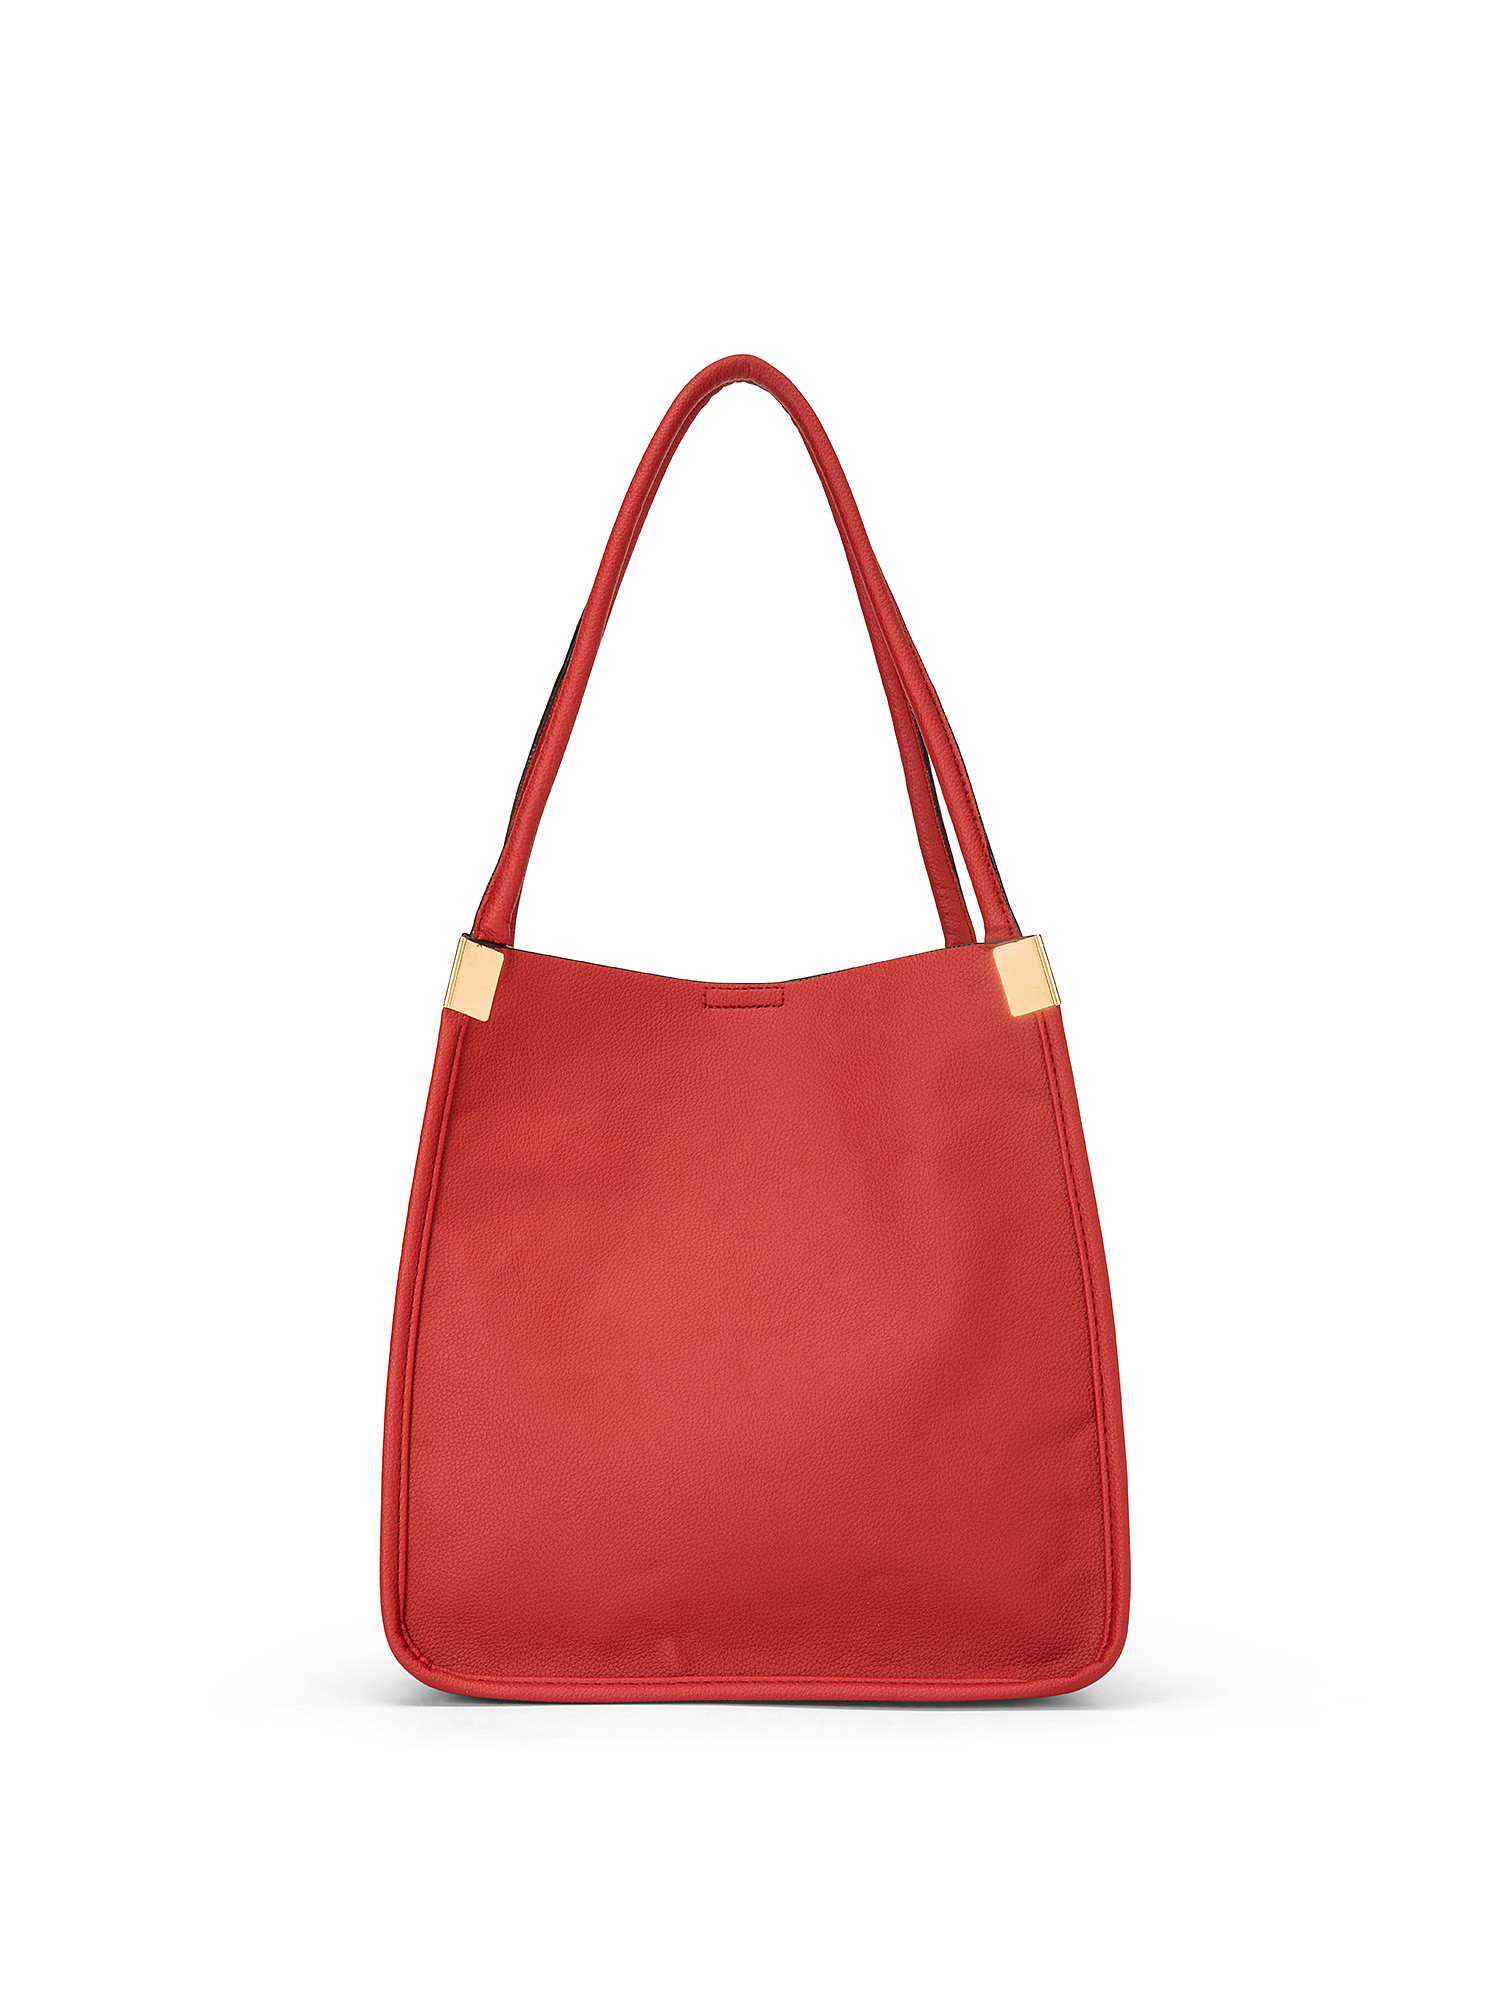 Shopping bag, Red, large image number 0